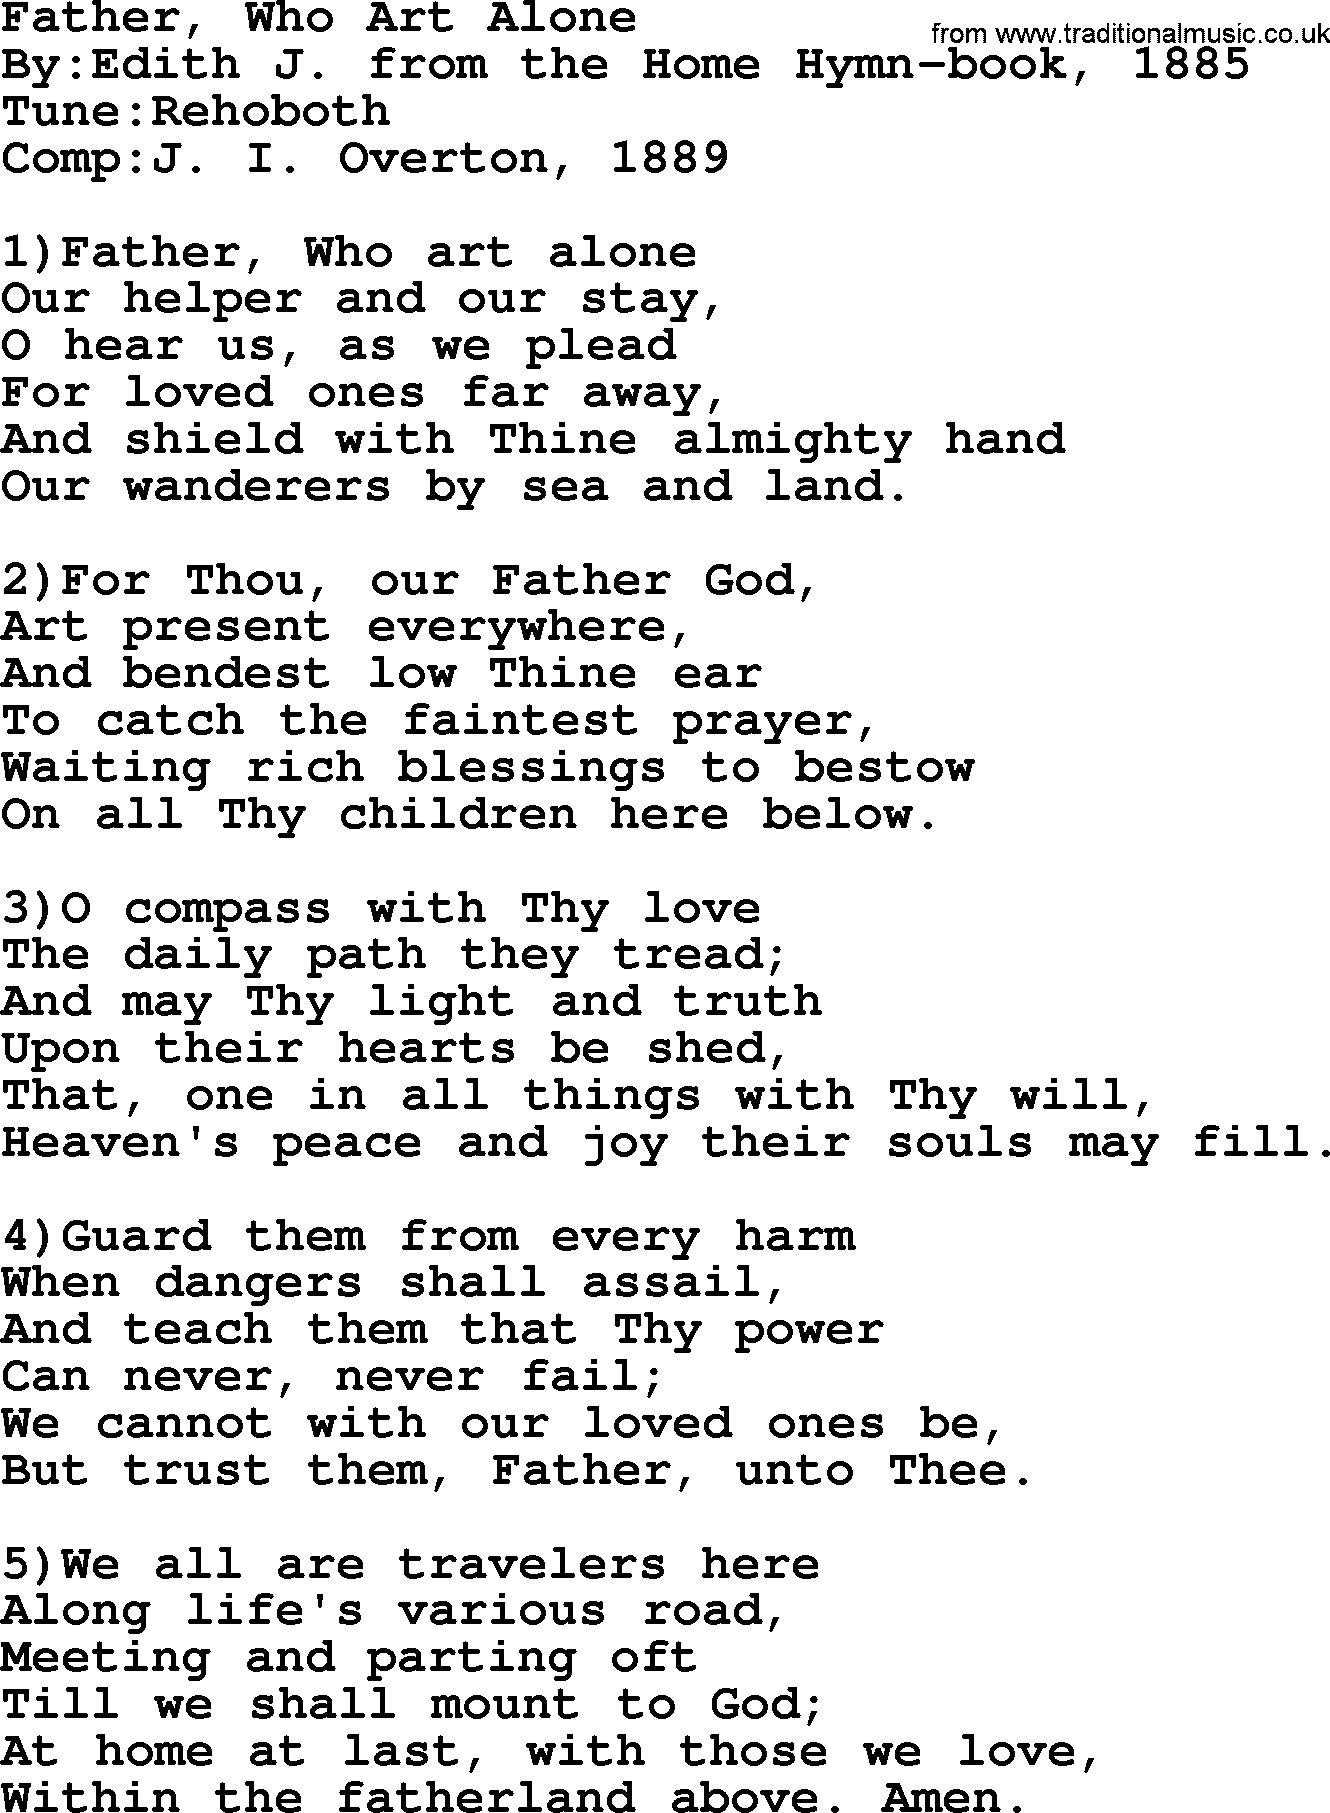 Methodist Hymn: Father, Who Art Alone, lyrics